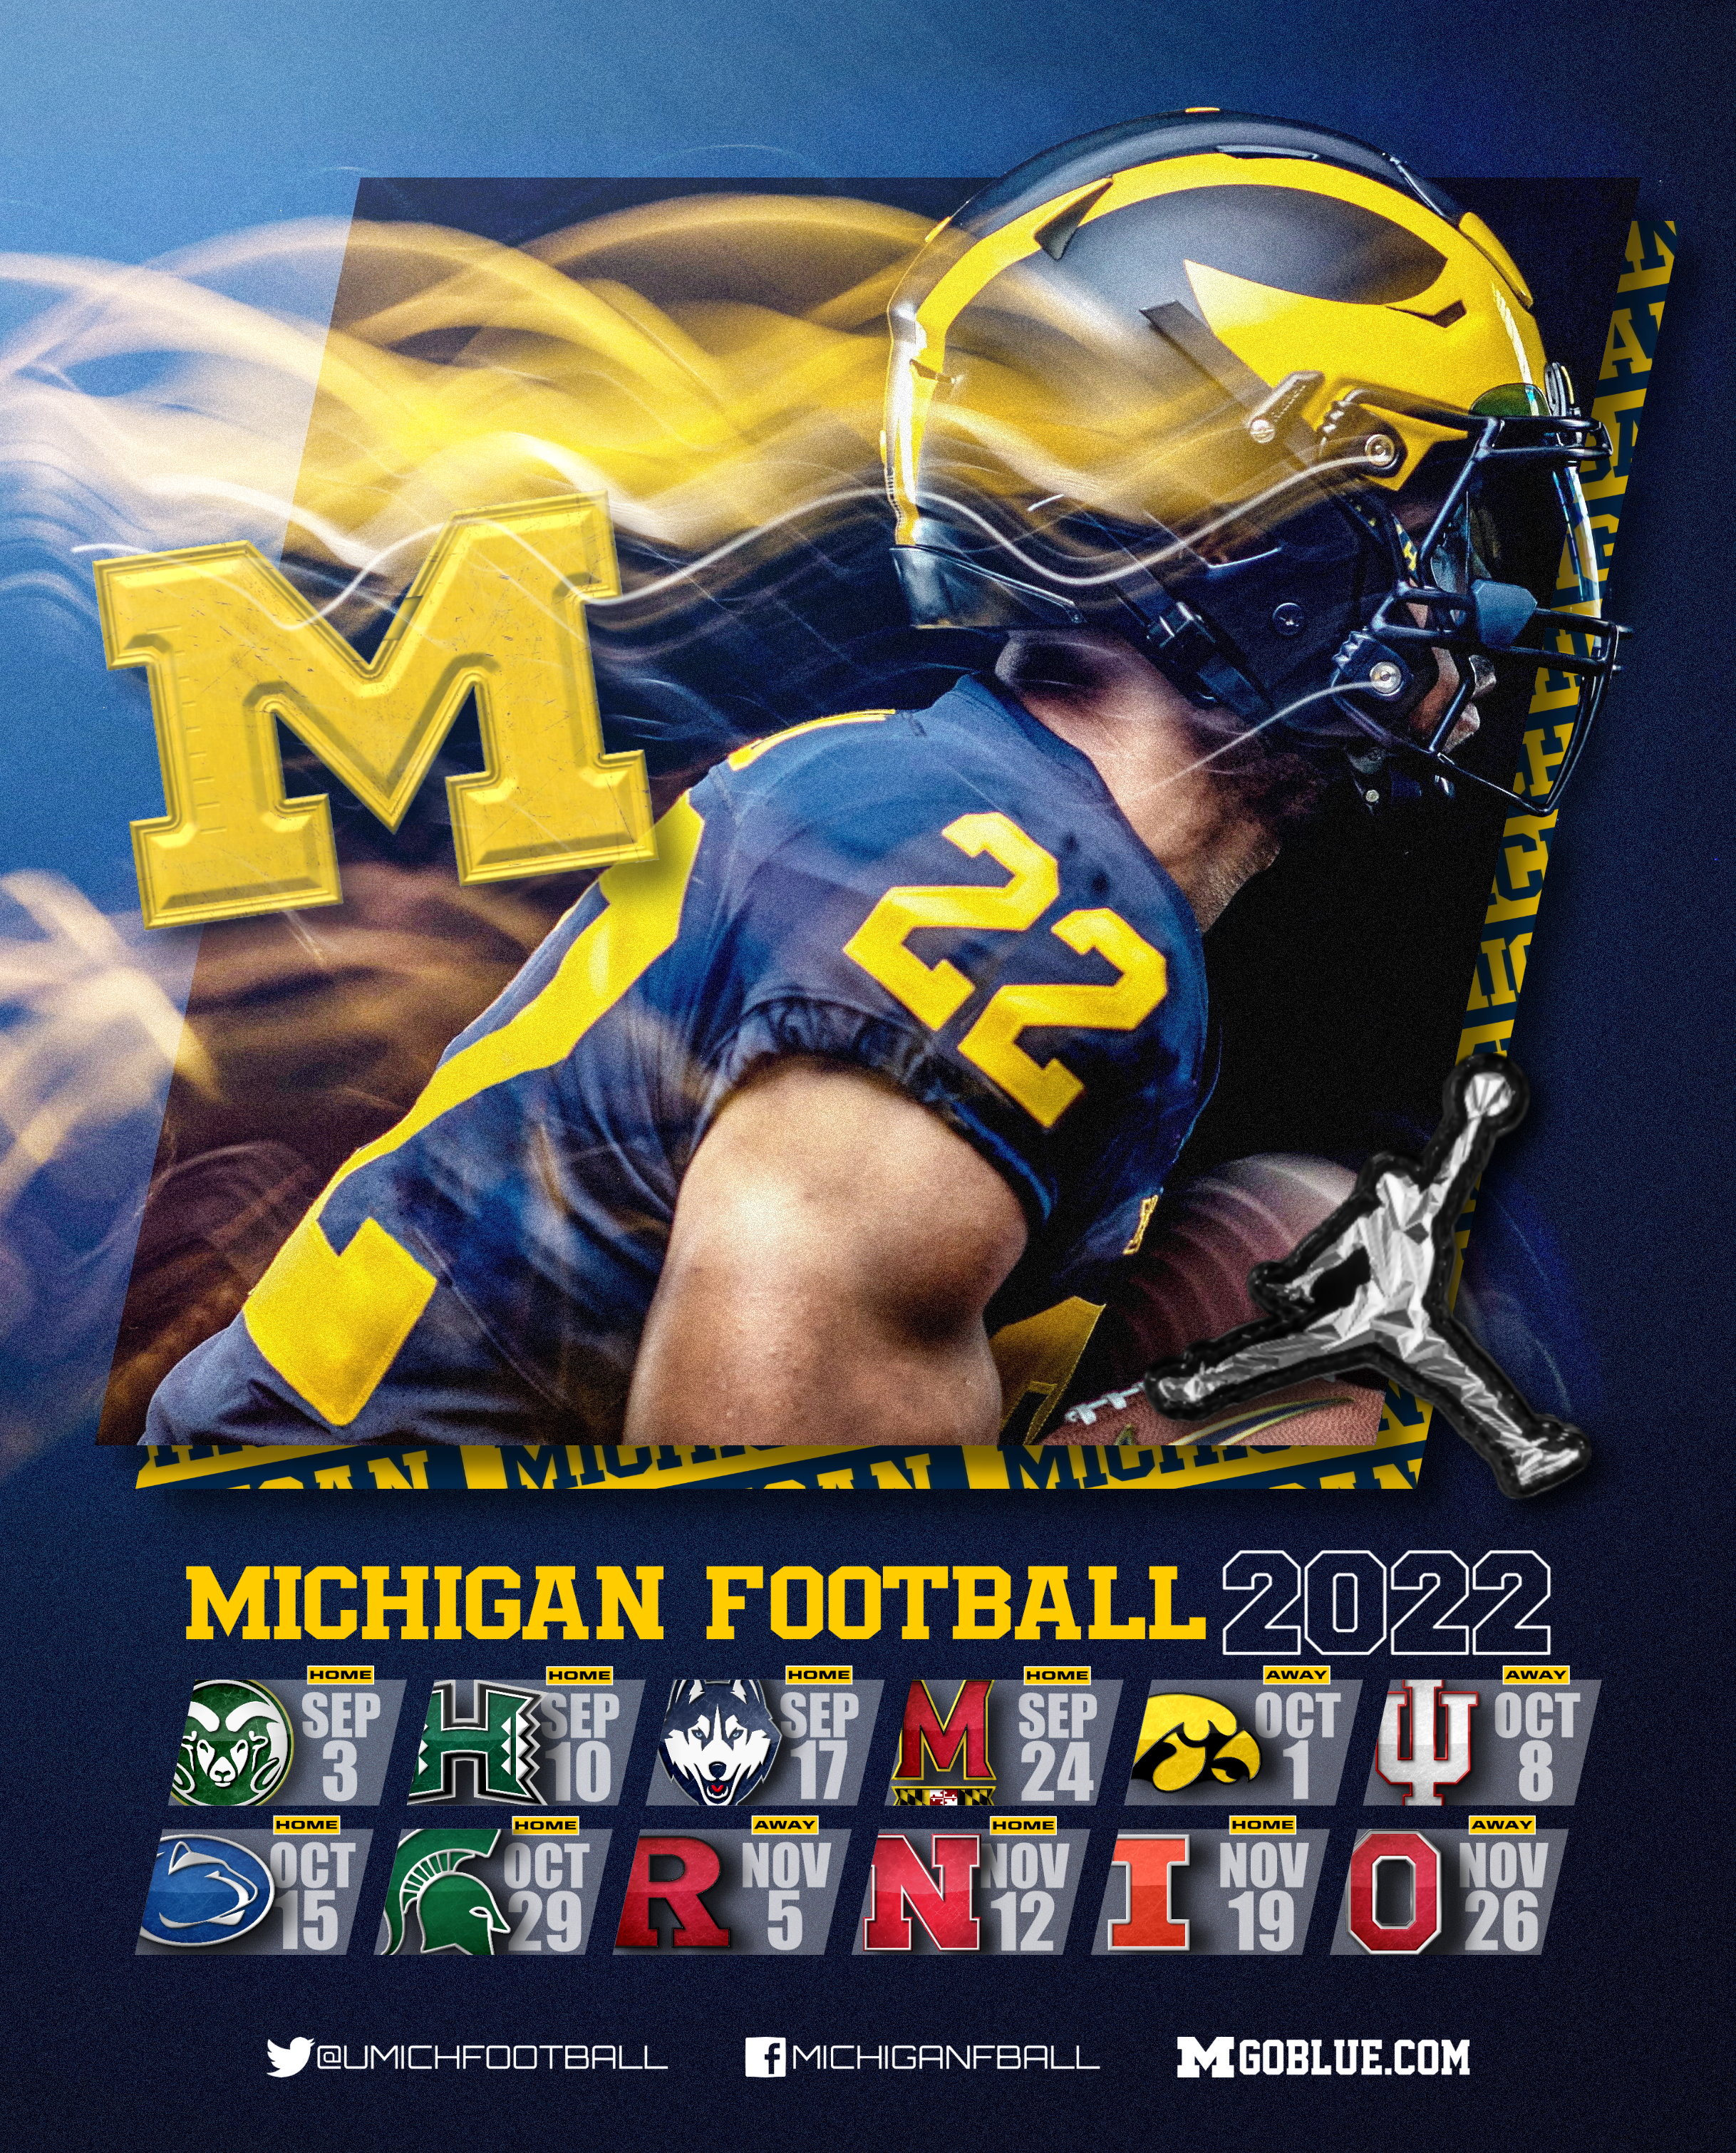 Michigan Schedule 2022 Michigan Football On Twitter: "𝐓𝐡𝐞 𝐌𝐢𝐜𝐡𝐢𝐠𝐚𝐧 𝐅𝐨𝐨𝐭𝐛𝐚𝐥𝐥 𝟐𝟎𝟐𝟐  𝐒𝐜𝐡𝐞𝐝𝐮𝐥𝐞! 🗞 Https://T.co/M6Z57Mi9Qh 🎟 Https://T.co/Zp7N31Szdy  #Goblue Https://T.co/Bab5Dwgoqv" / Twitter